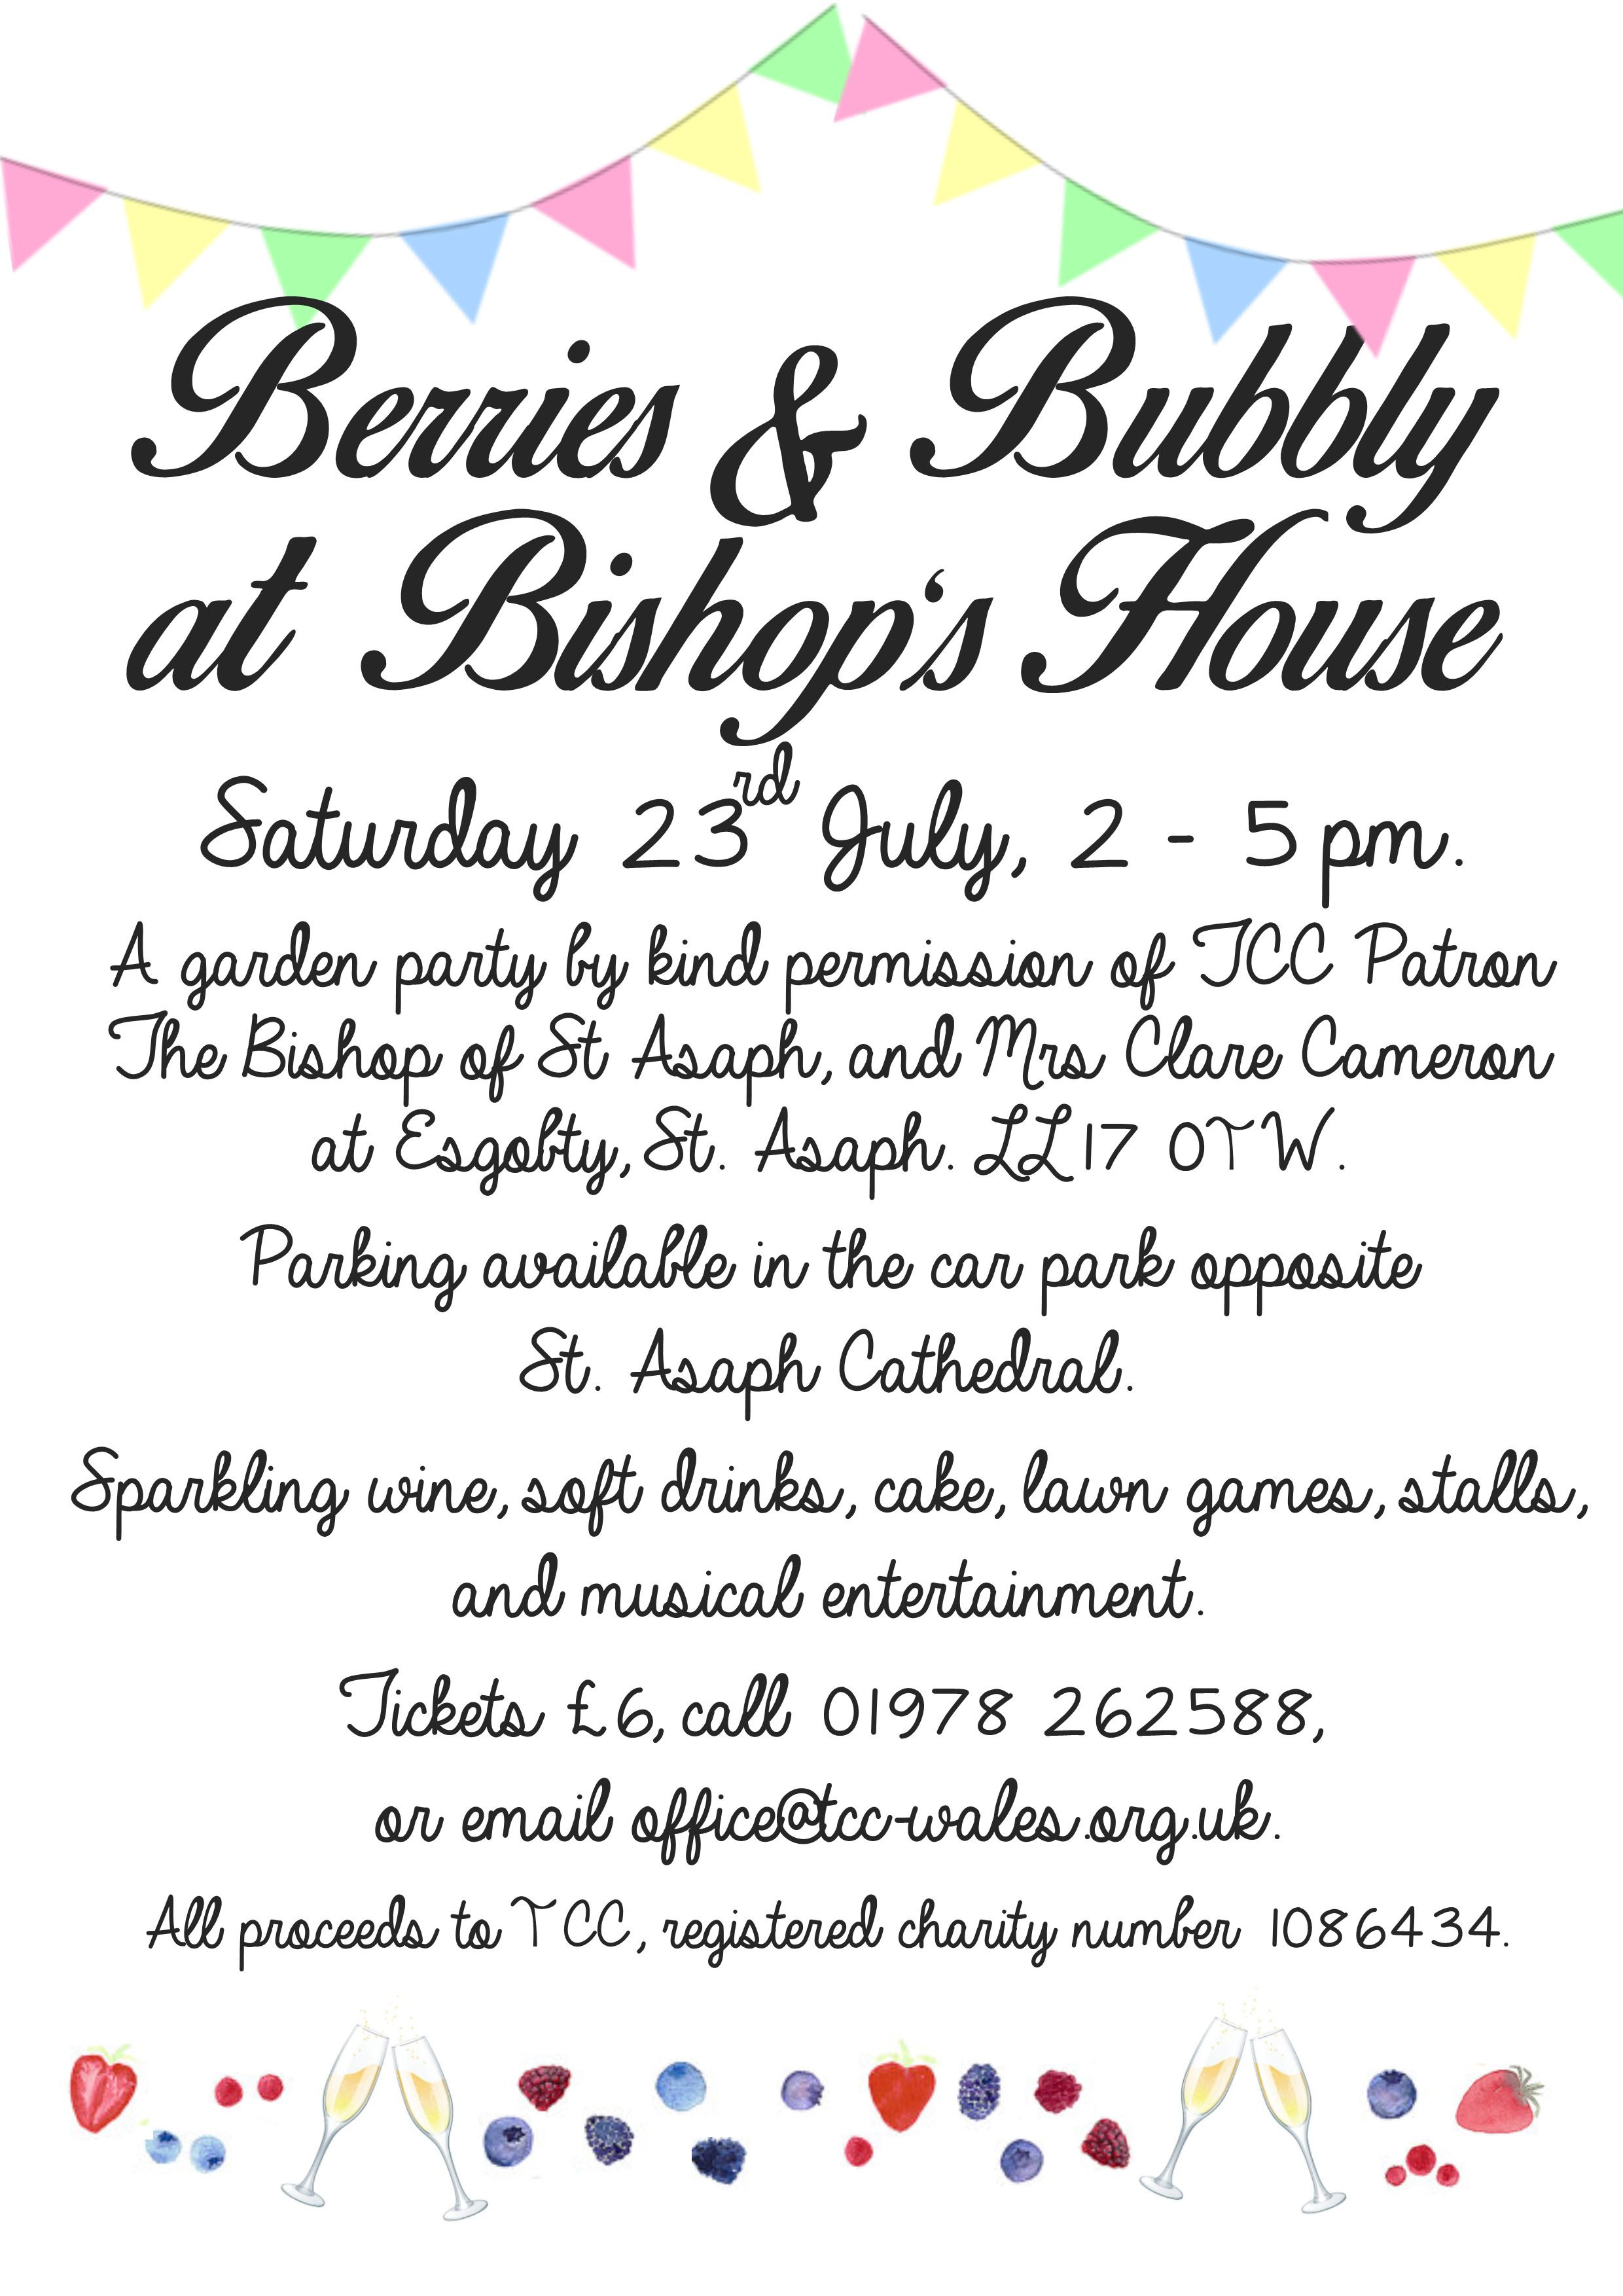 Bishop-Gregorys-garden-party-23rd-July